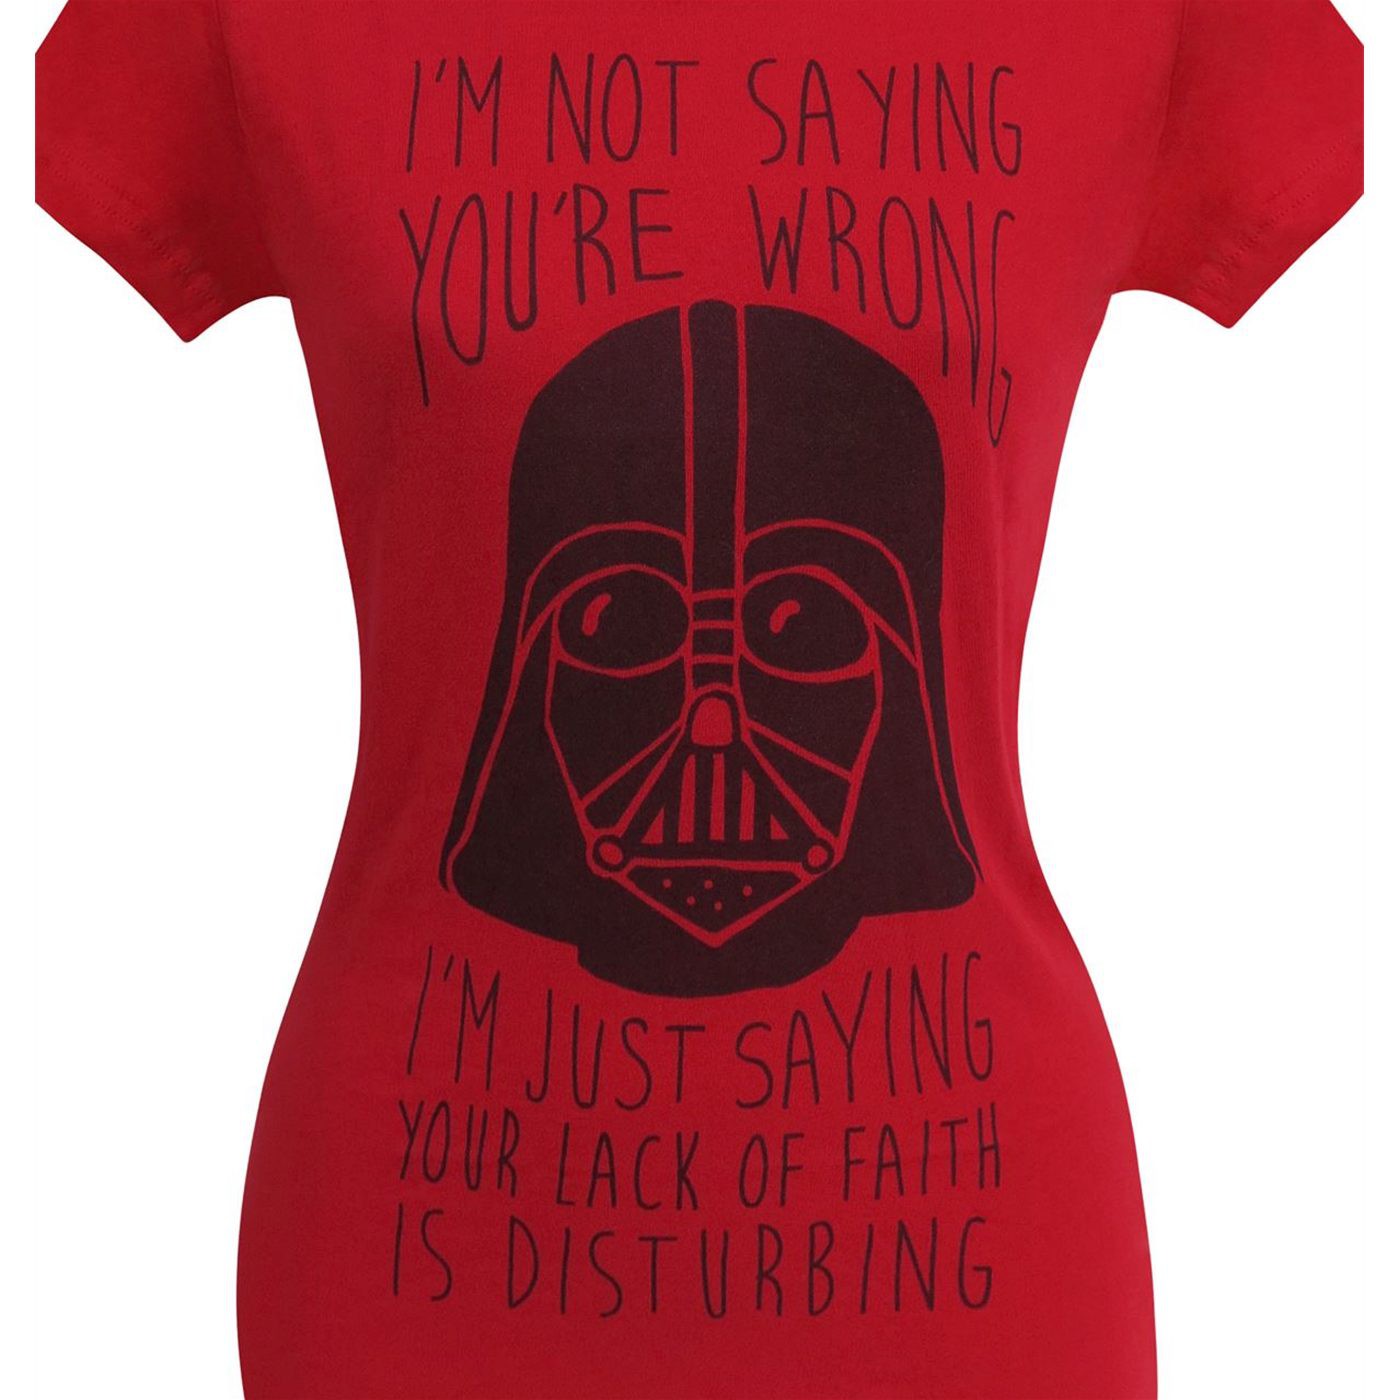 Star Wars Vader Lack of Faith Women's T-Shirt